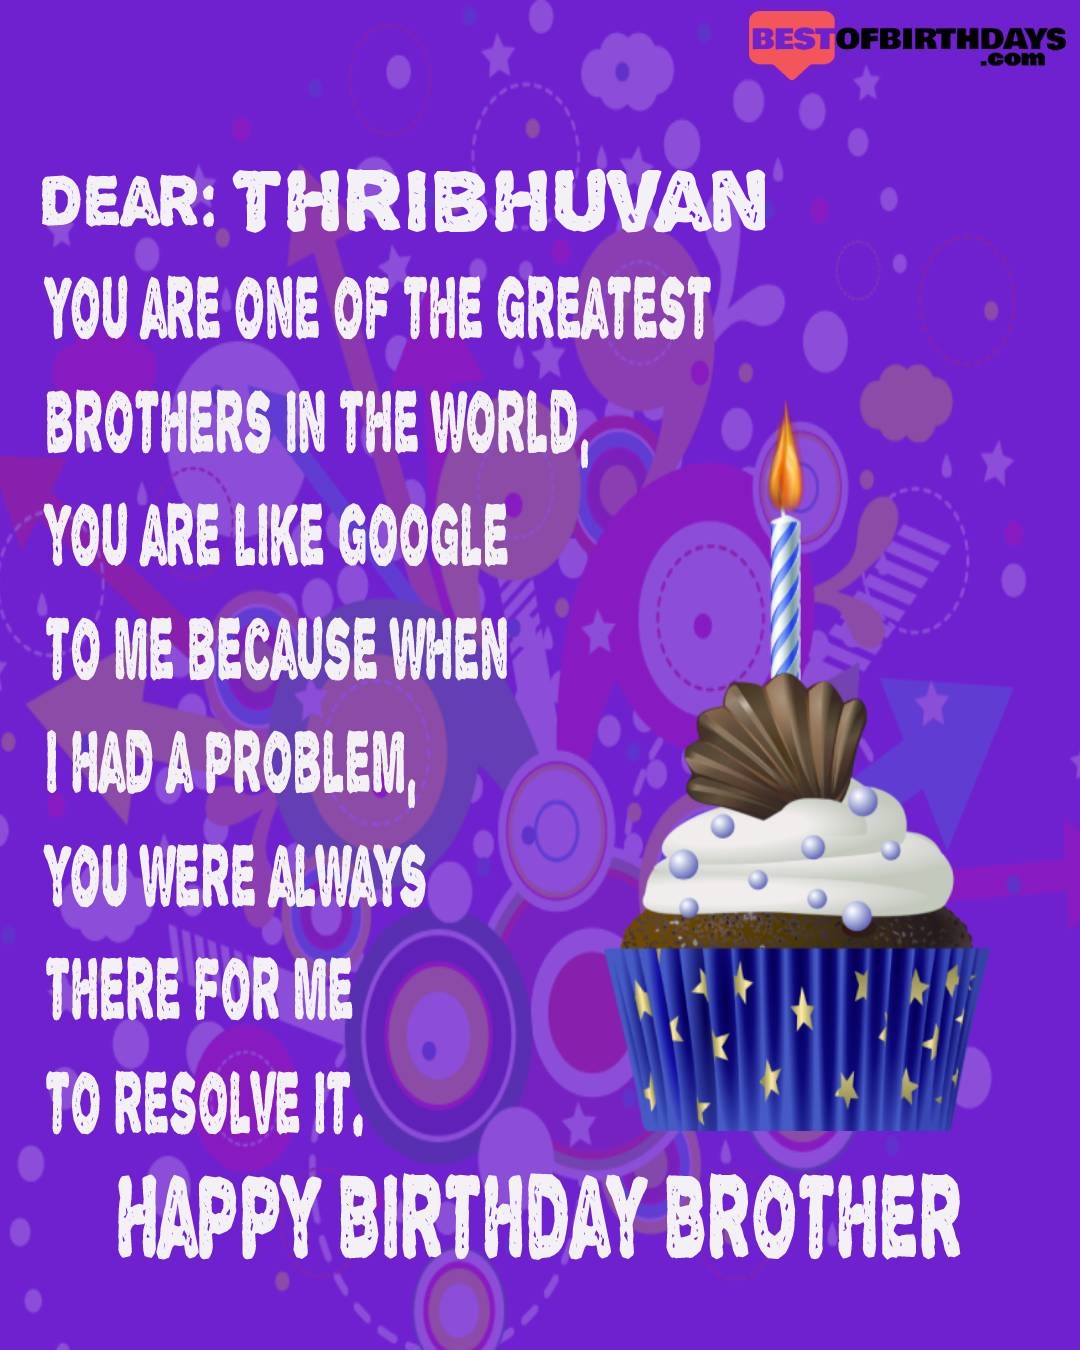 Happy birthday thribhuvan bhai brother bro